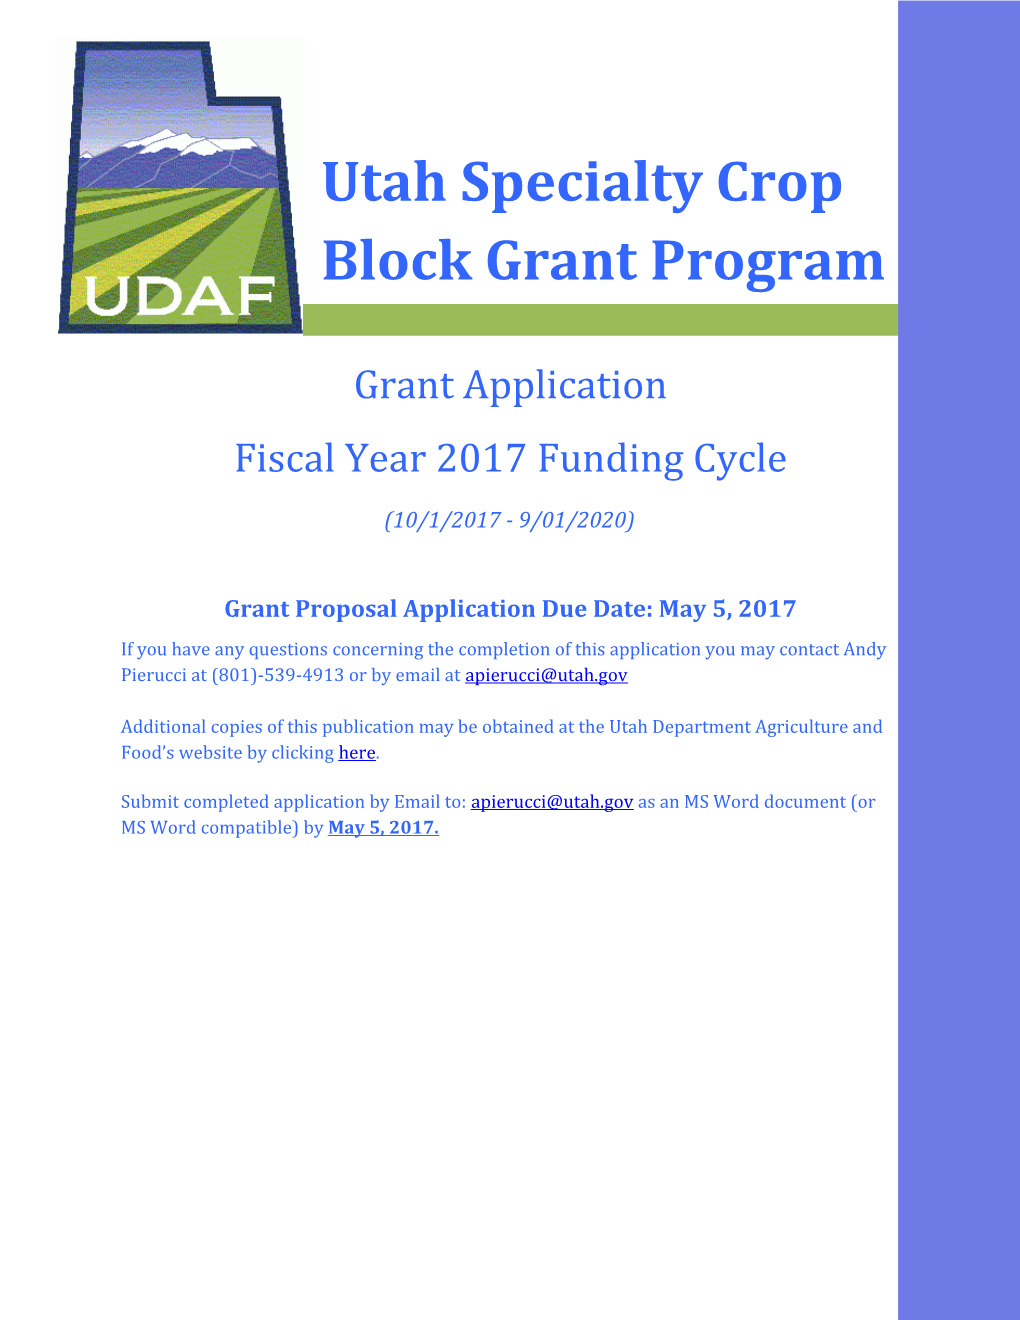 Utah Specialty Crop Block Grant Program